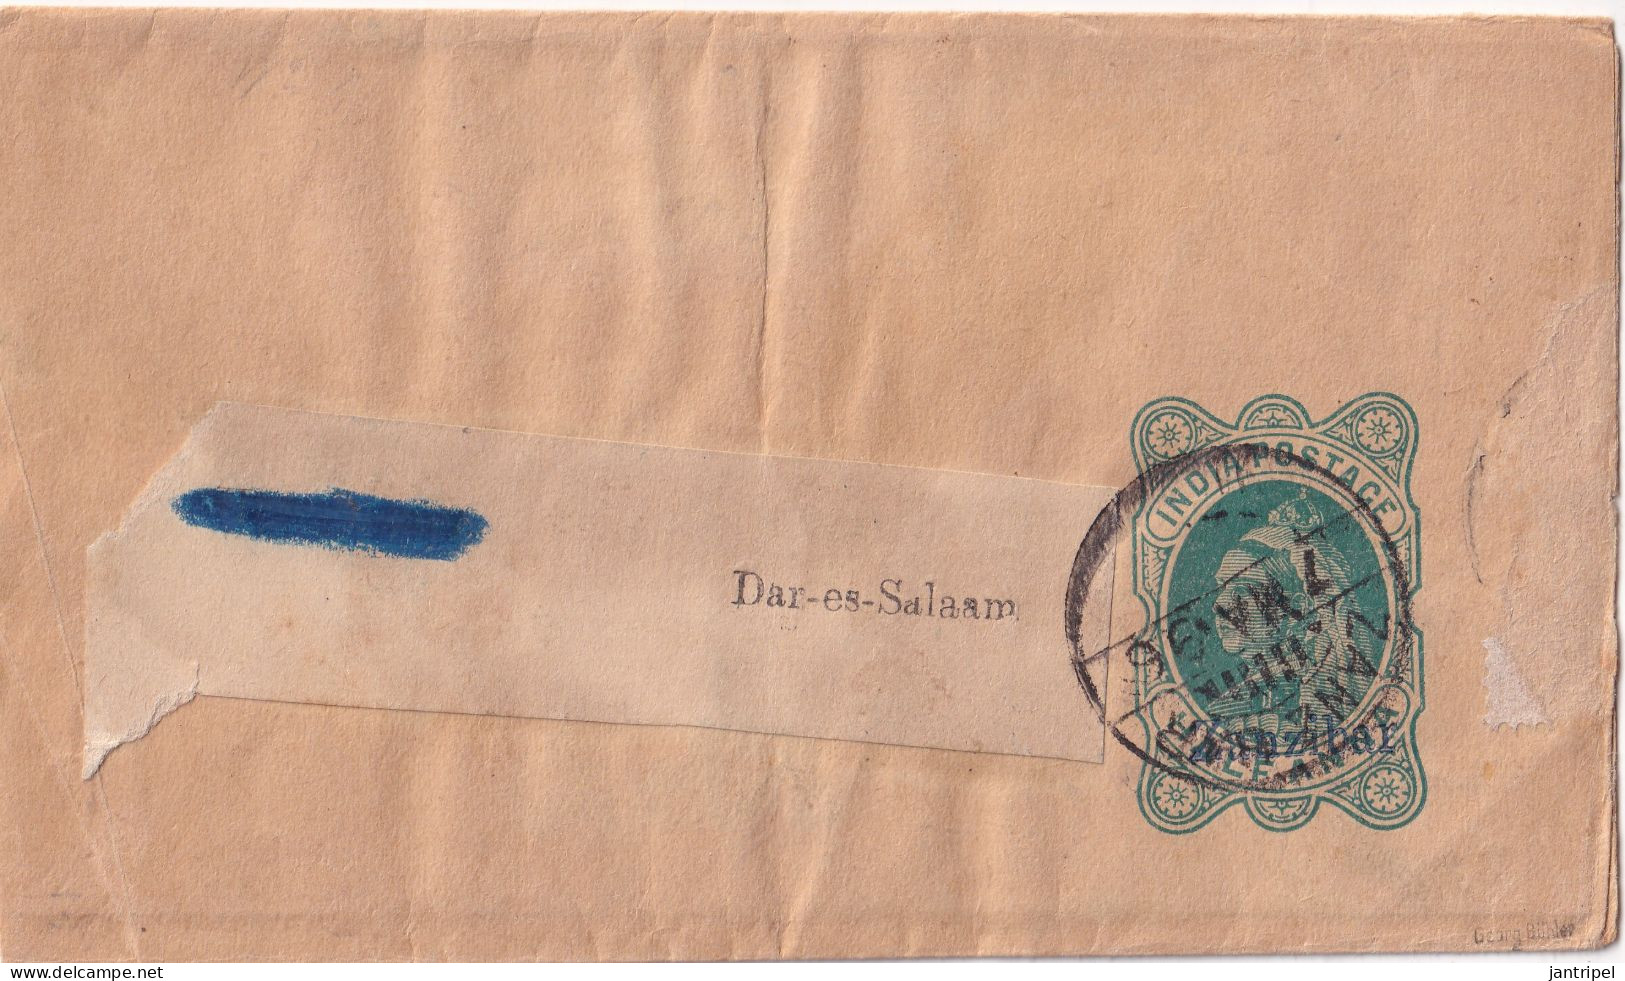 ZANZIBAR 1896 OVERPRINTED  QV  1/2A INDIA NEWSPAPERWRAPPER SEND TO DAR -ES SALAAM - Zanzibar (...-1963)